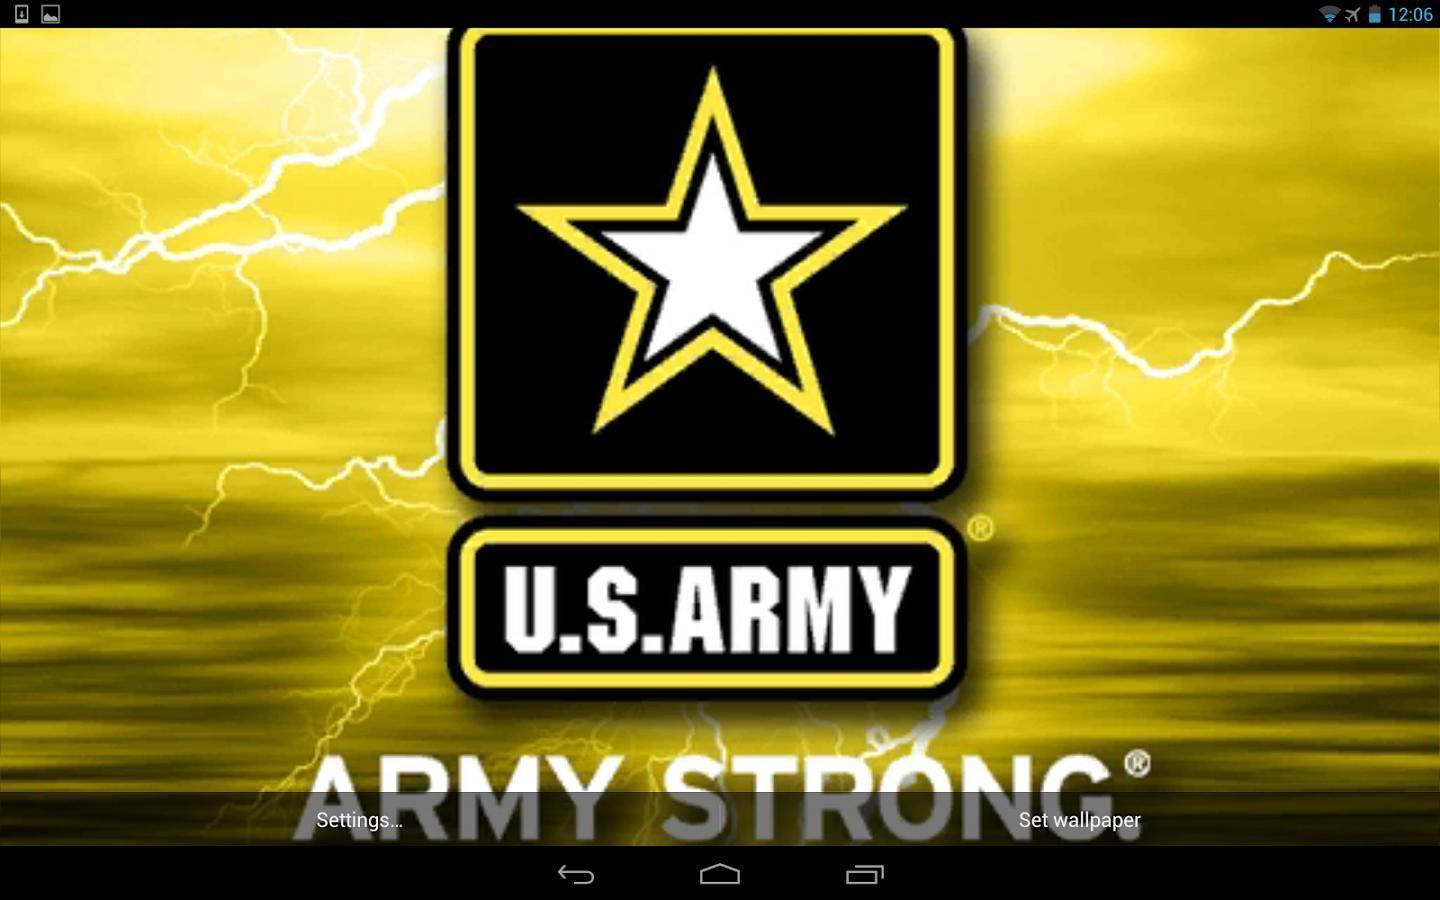 U.S. Army Wallpaper & Cadences Apps on Google Play